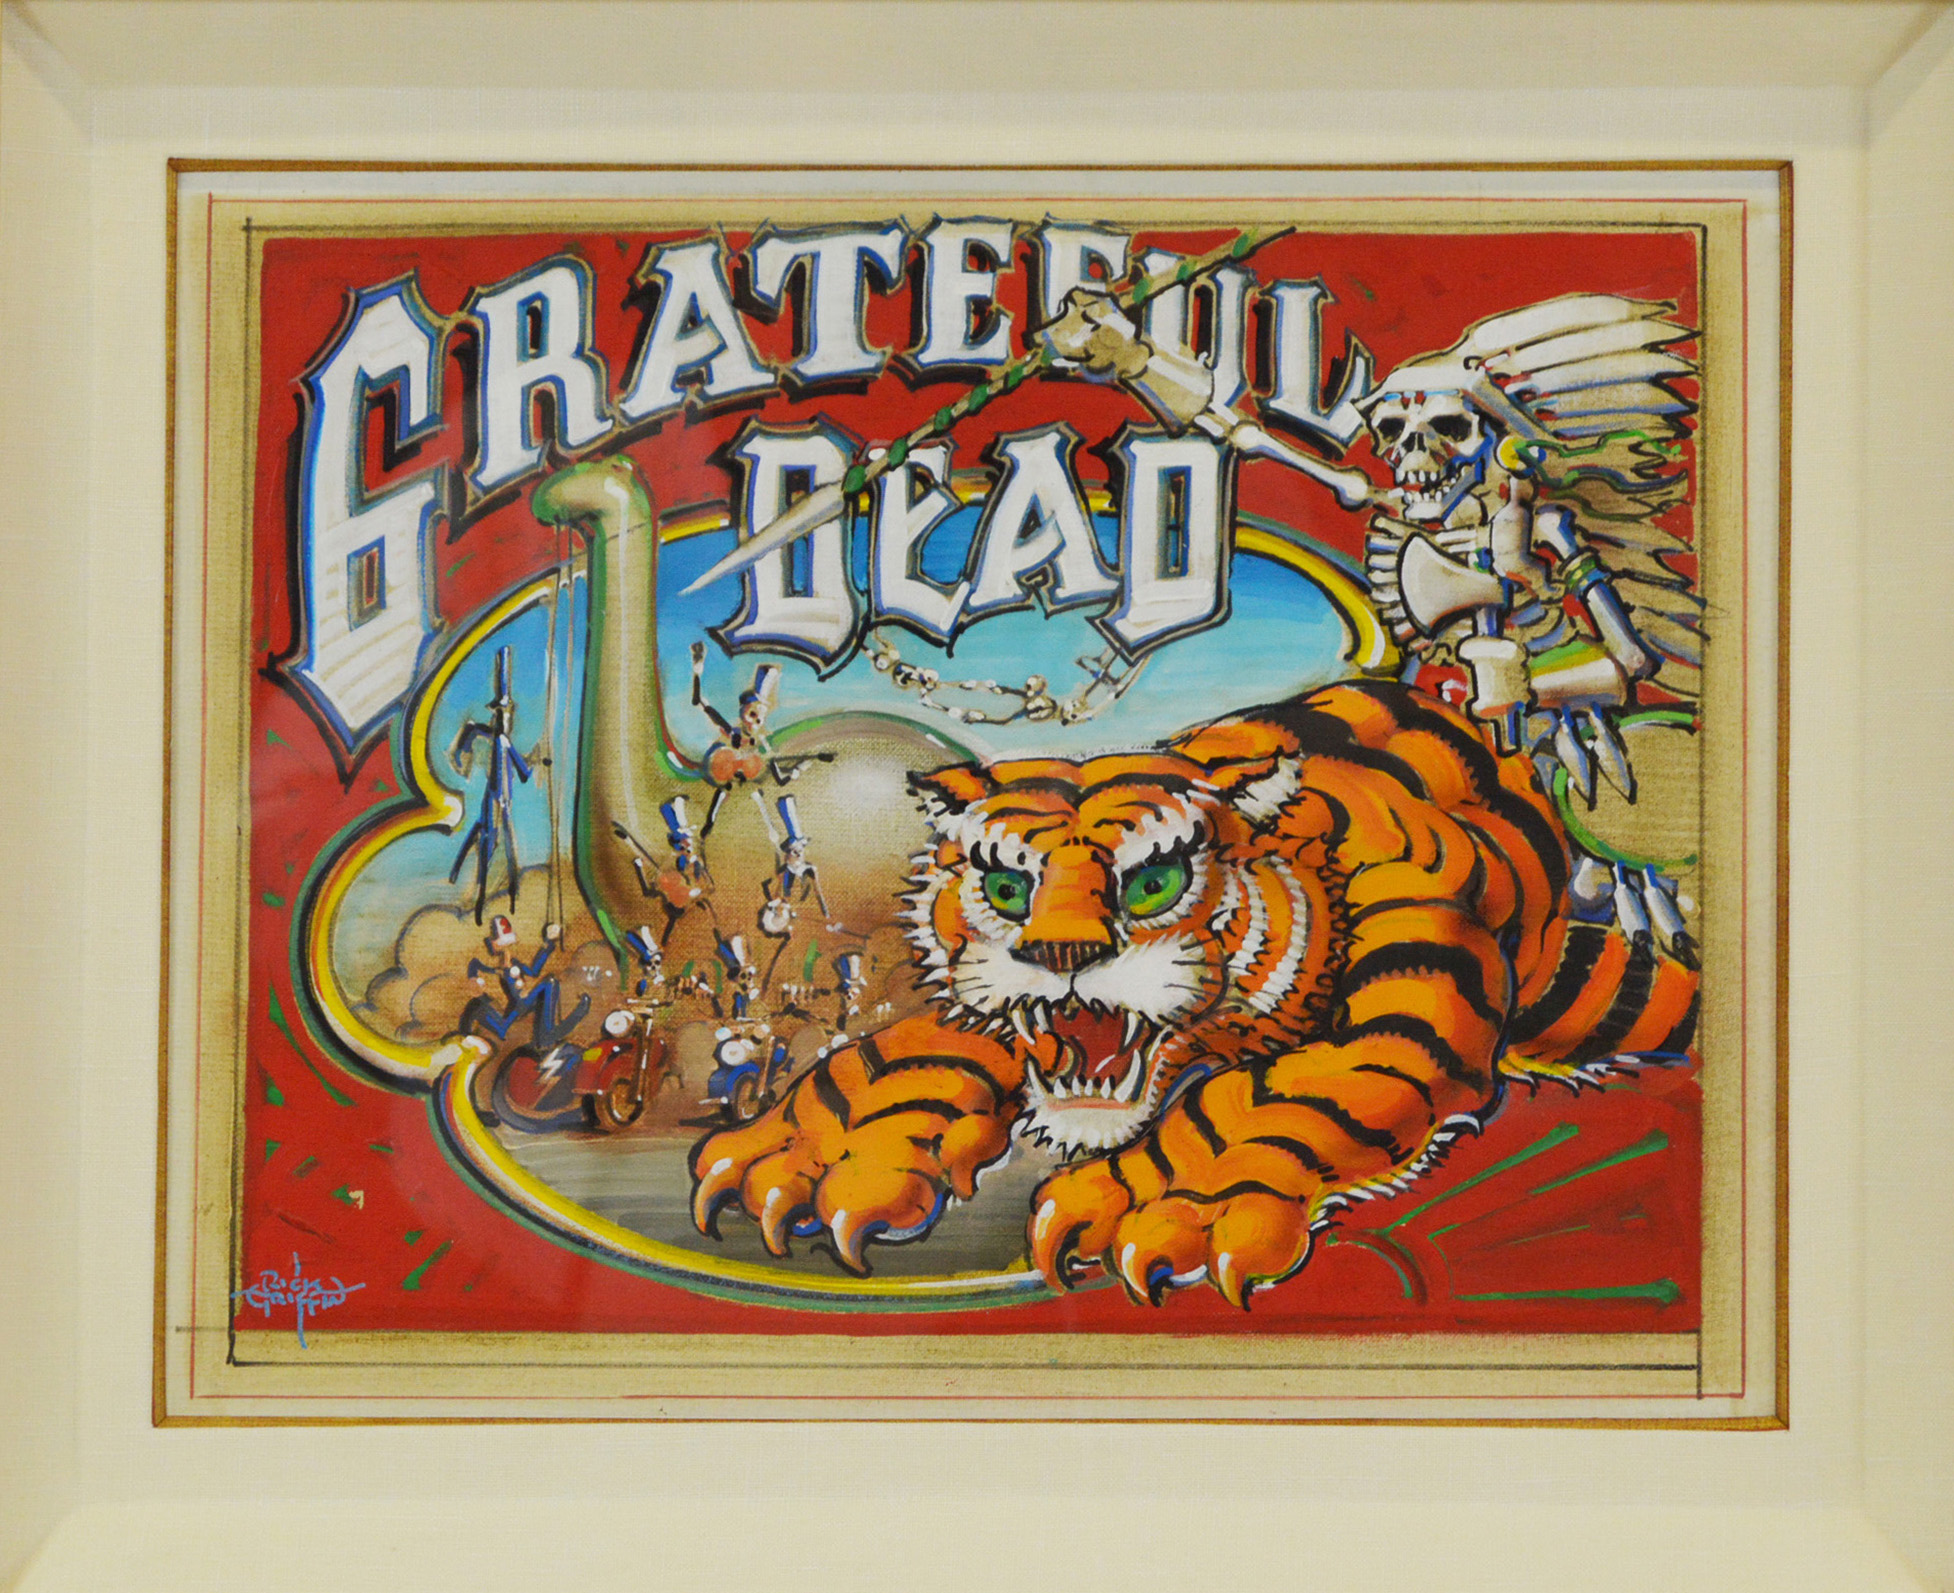 Astonishing Grateful Dead Memorabilia To Be Auctioned | Grateful Web